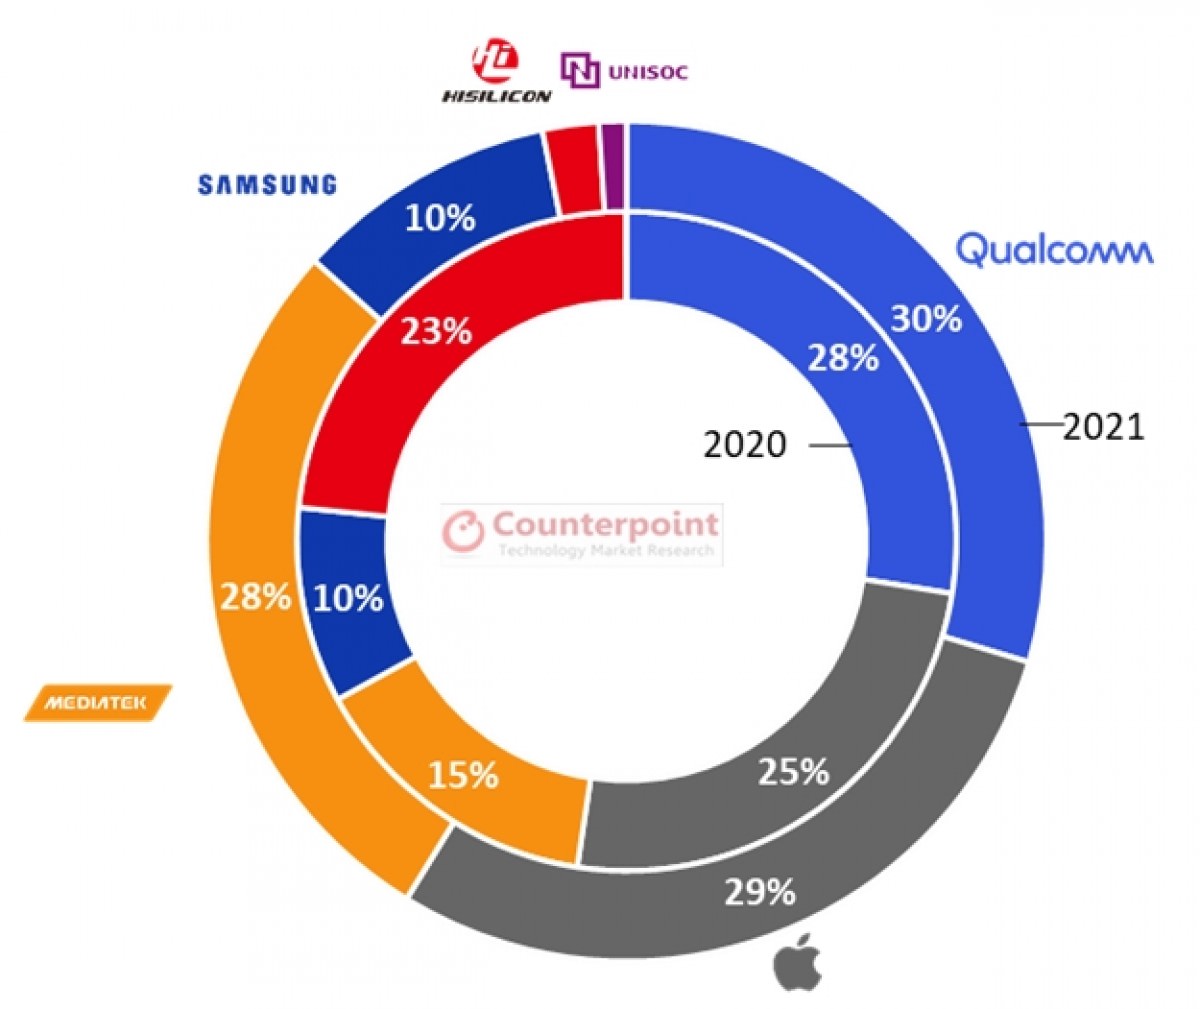 5g chip market share - کانترپوینت: مدیاتک جایگاه نخست بازار تراشه را در سال ۲۰۲۱ حفظ خواهد کرد